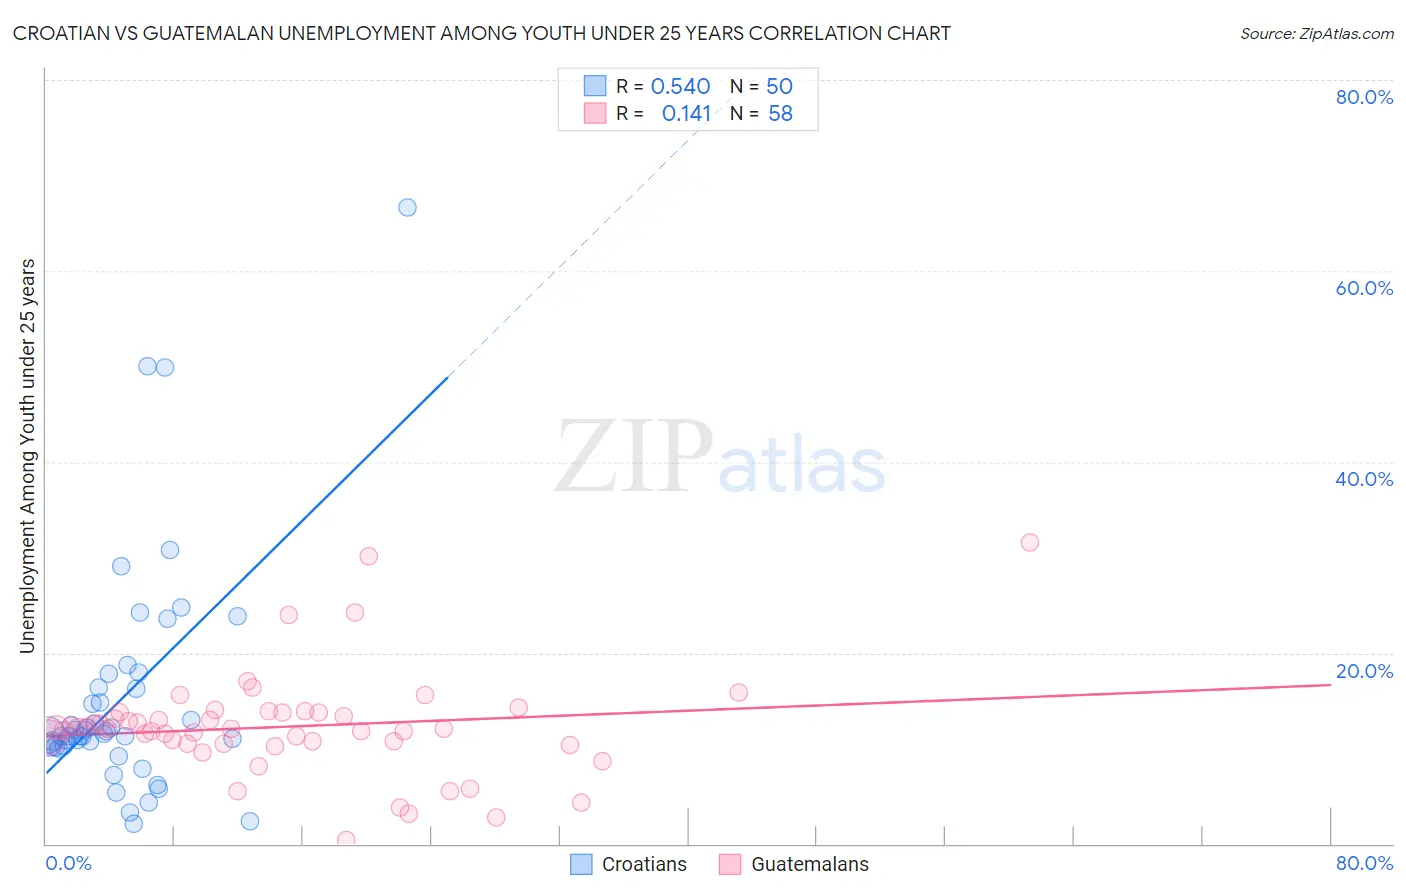 Croatian vs Guatemalan Unemployment Among Youth under 25 years